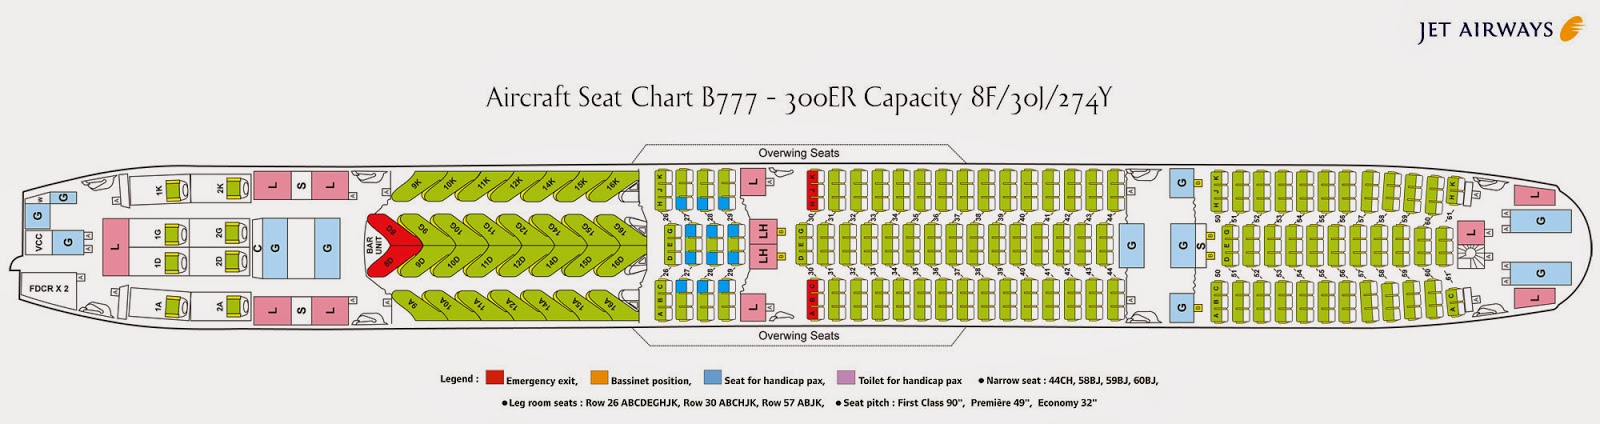 Боинг 777 300ер схема мест